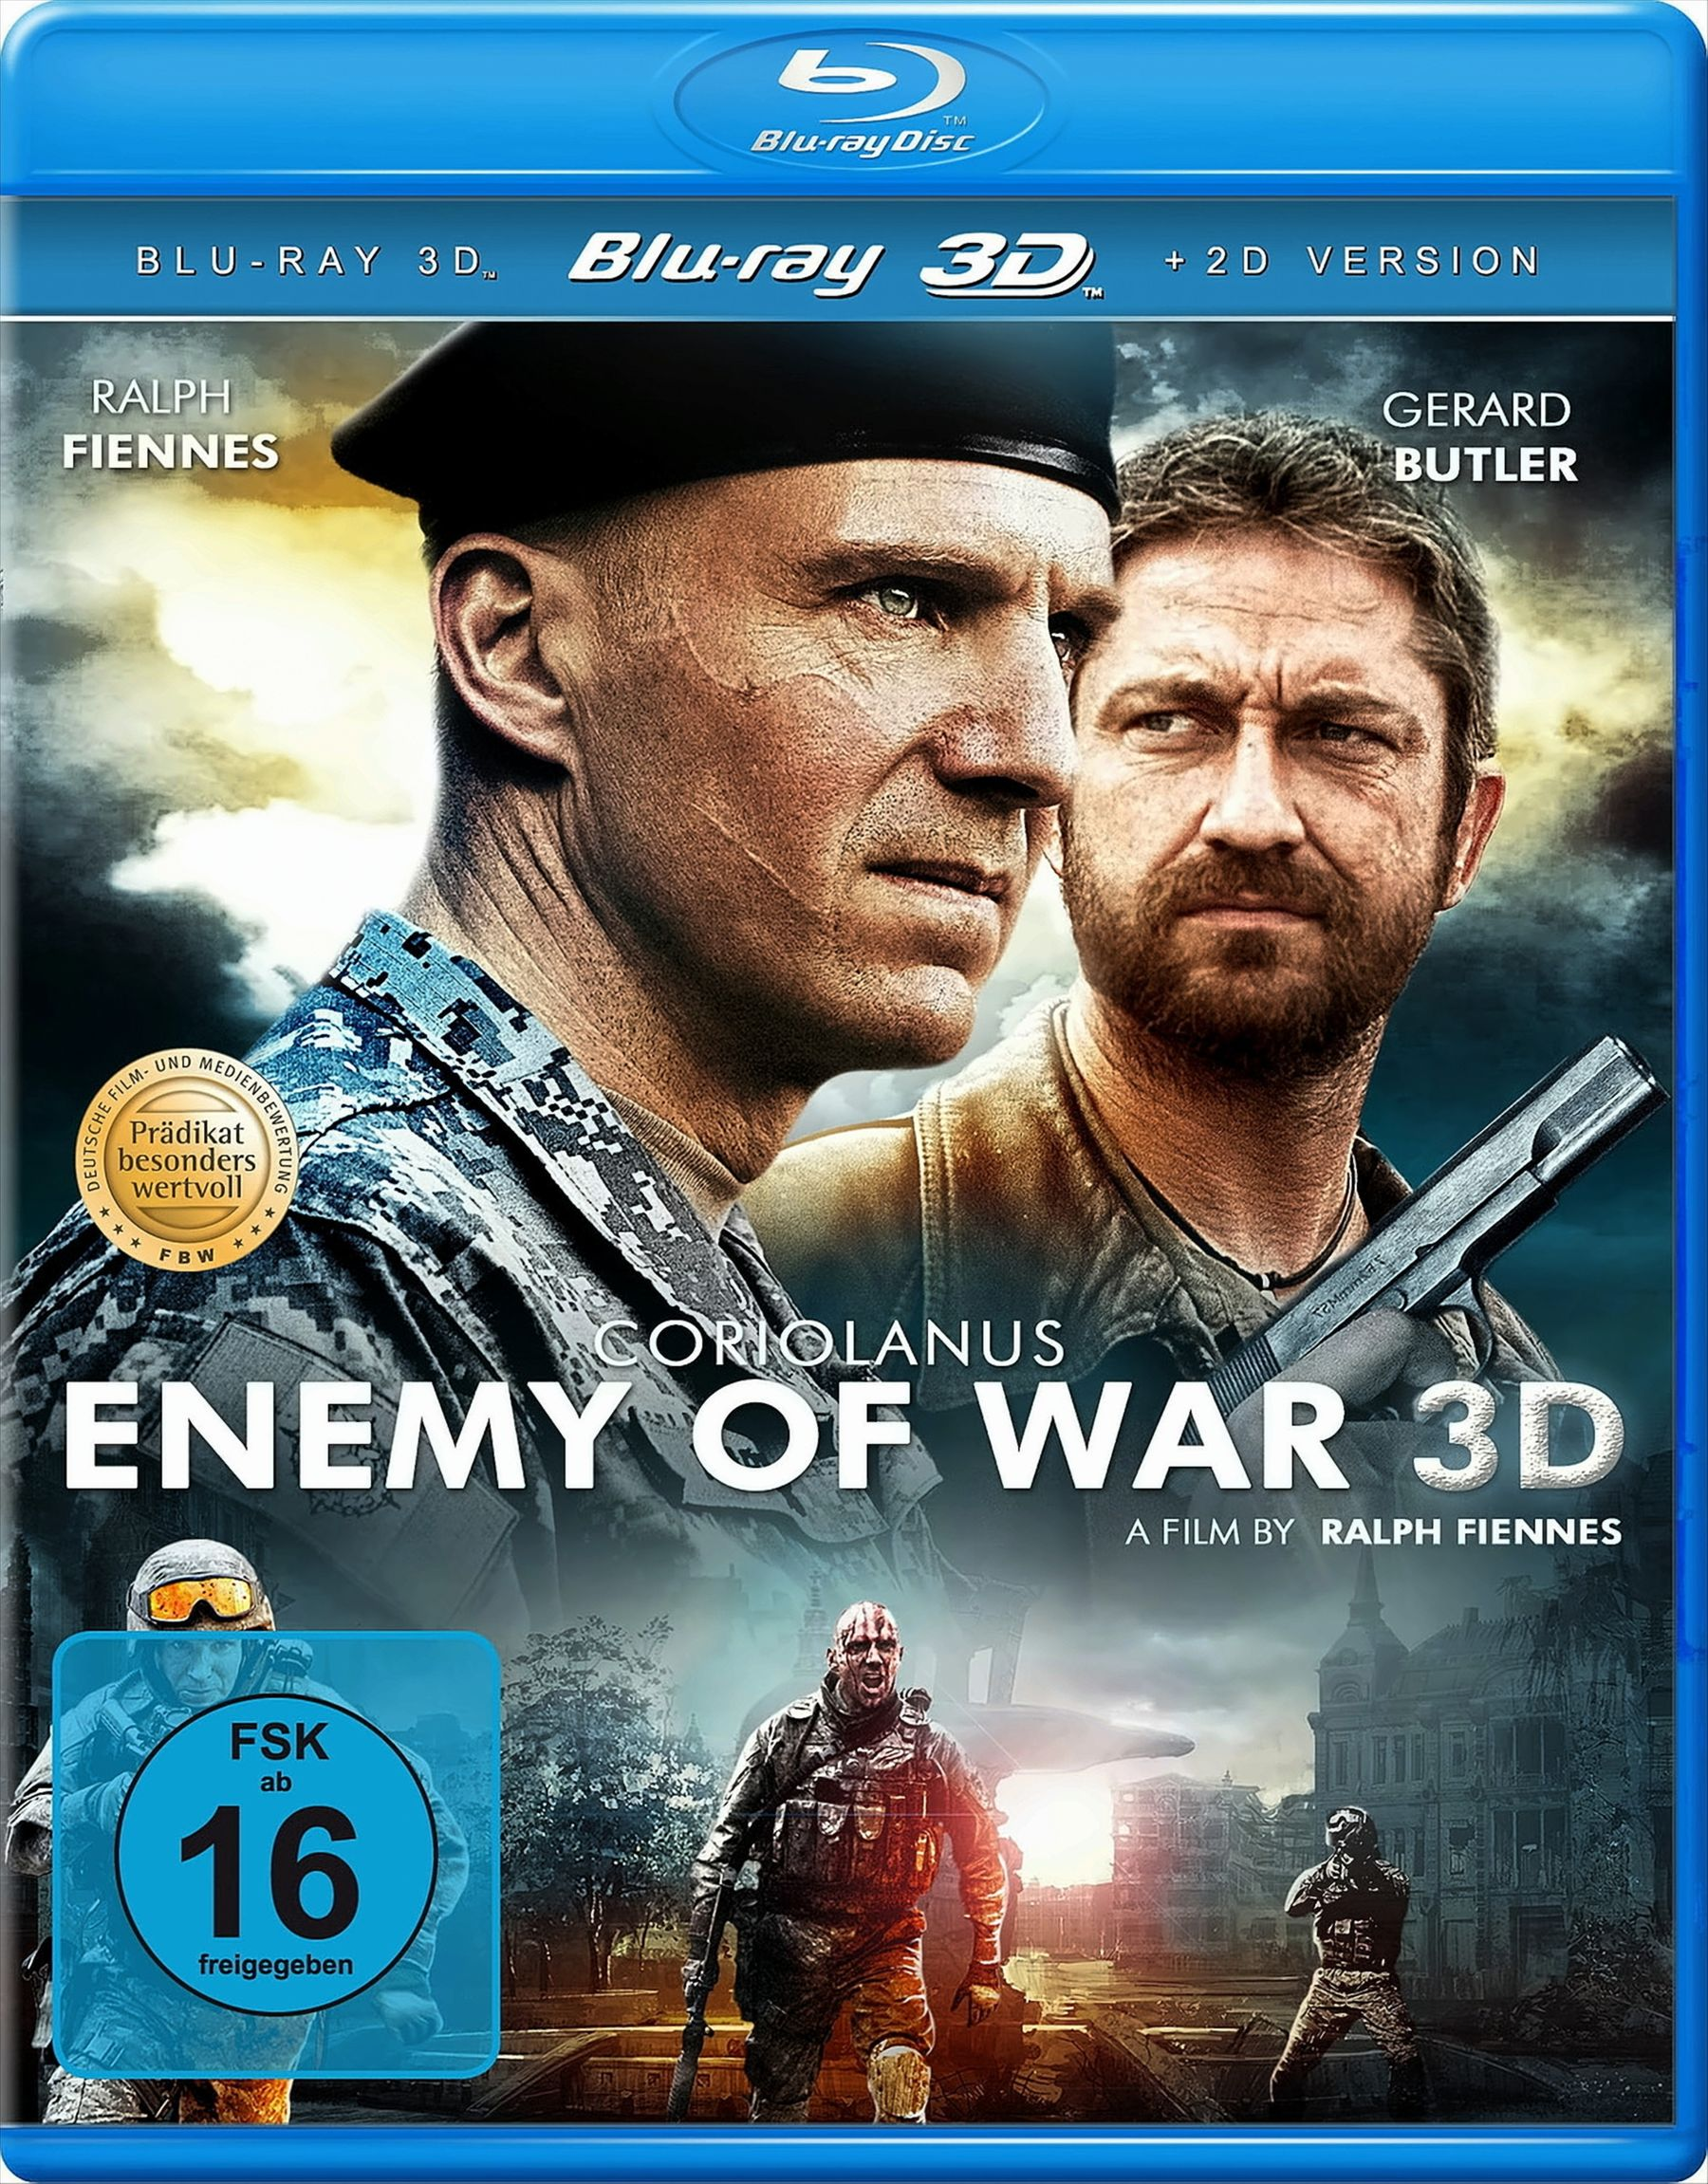 Enemy 3D Coriolanus - War Blu-ray of